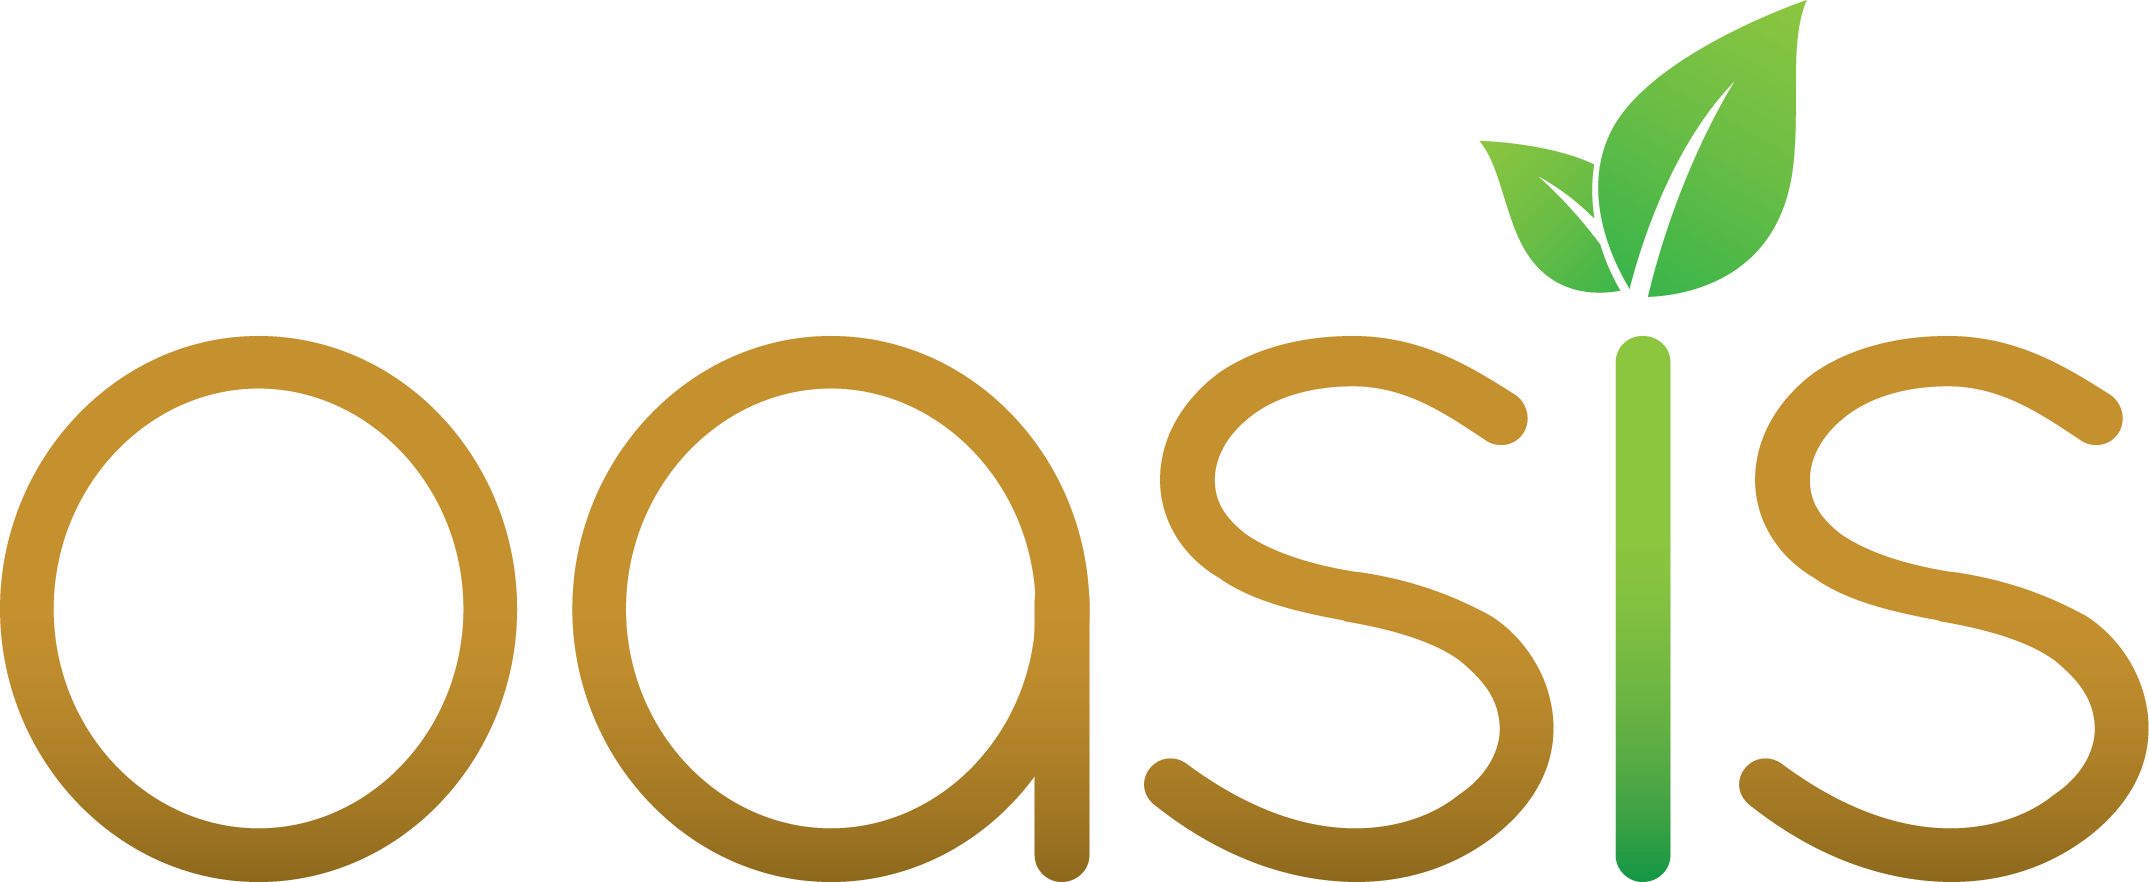 Oasis Vegetarian Cafe - Oasis Vegetarian Cafe (2149x882)